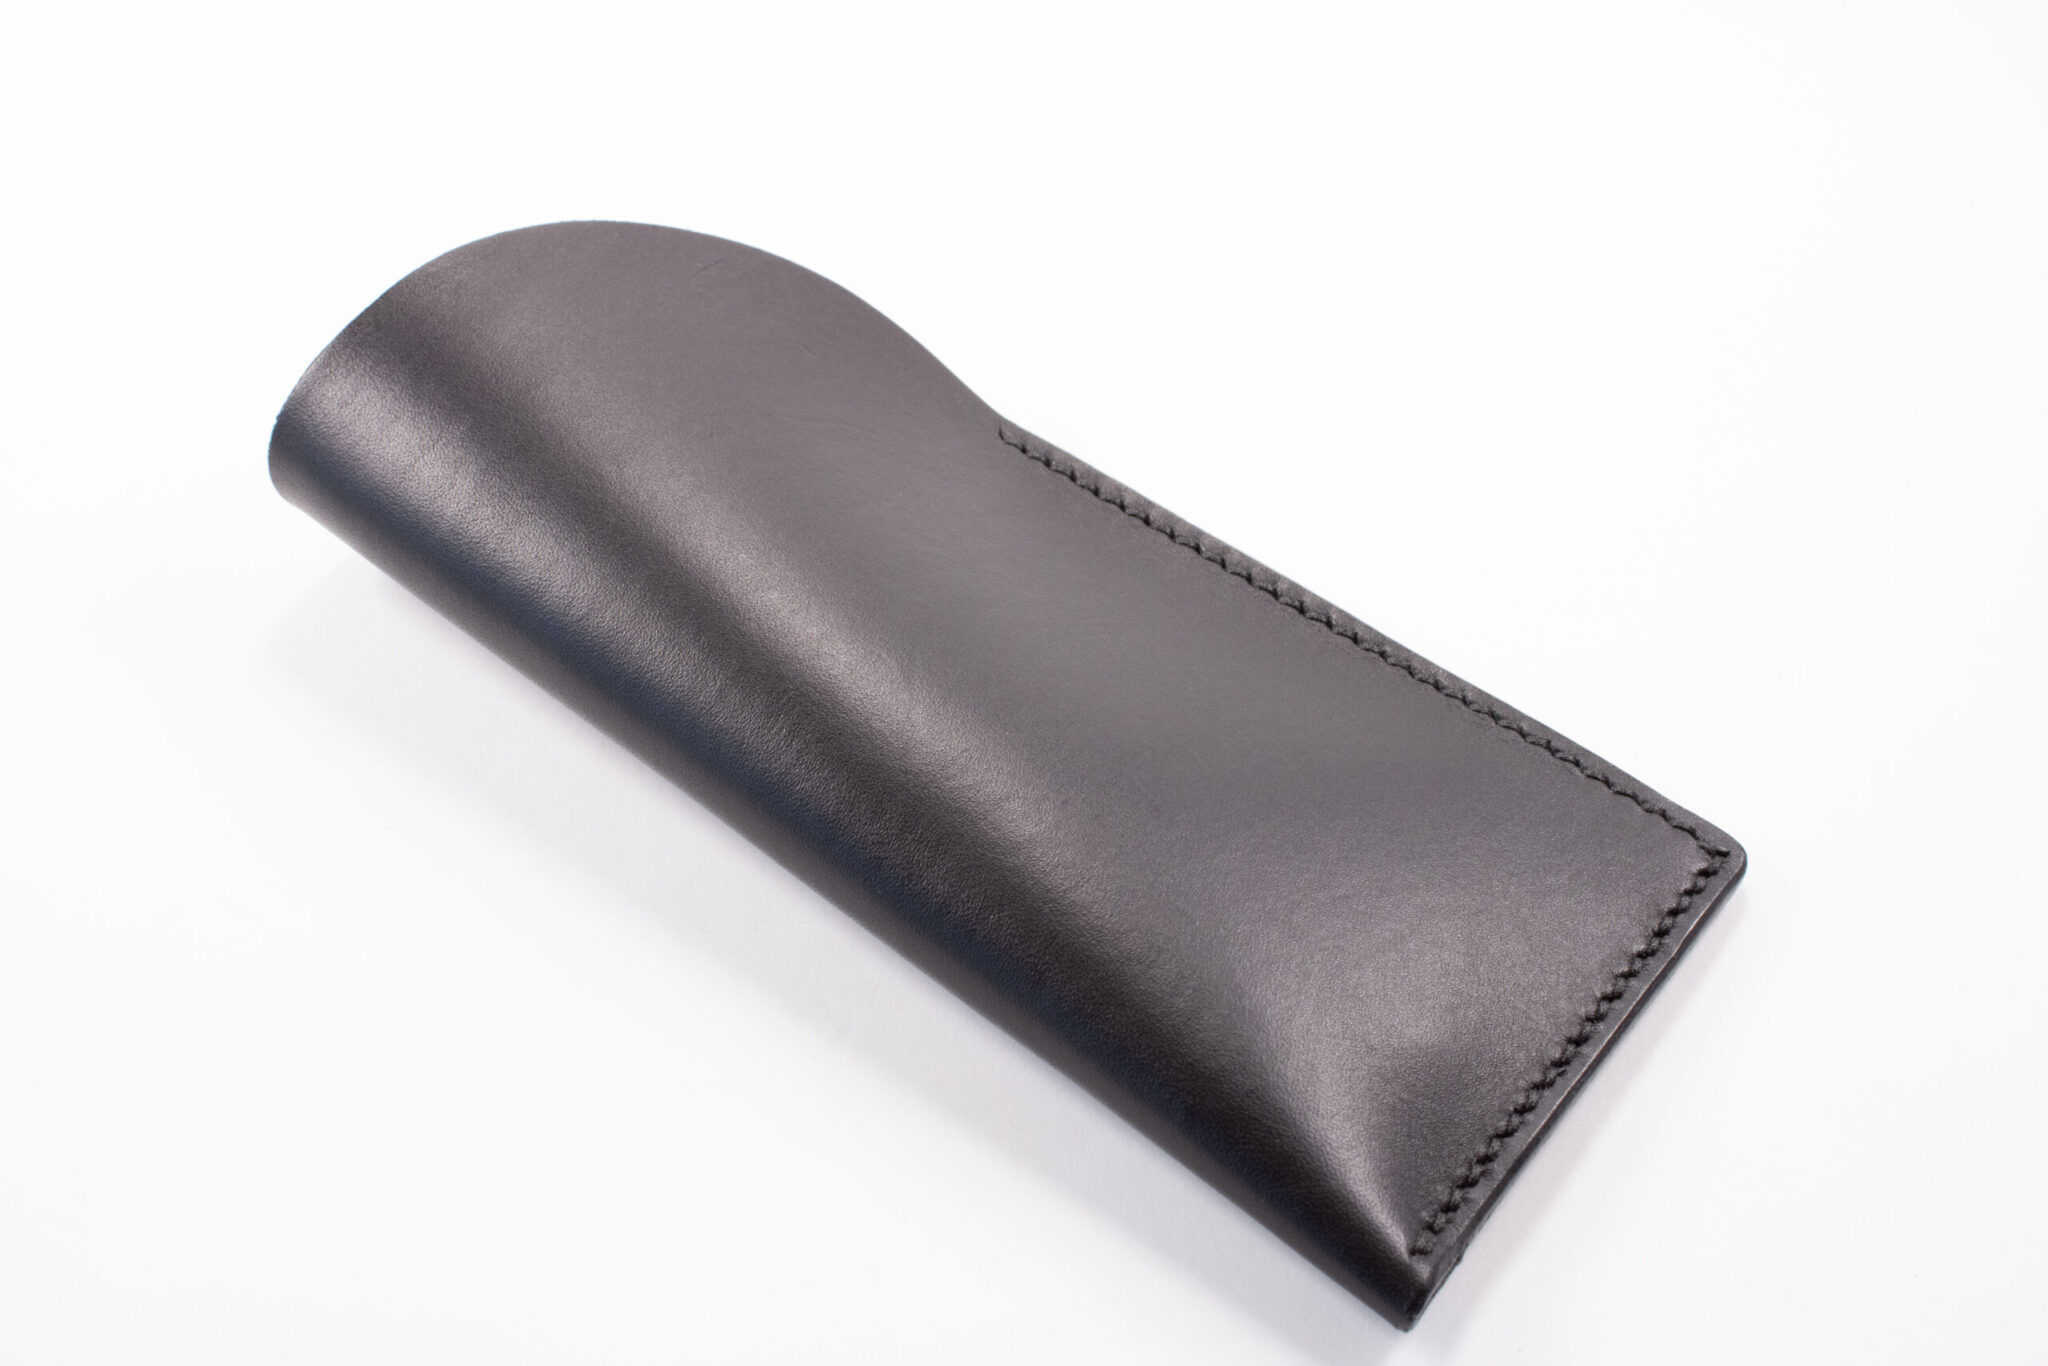 Product image of FredFloris leather glasses case